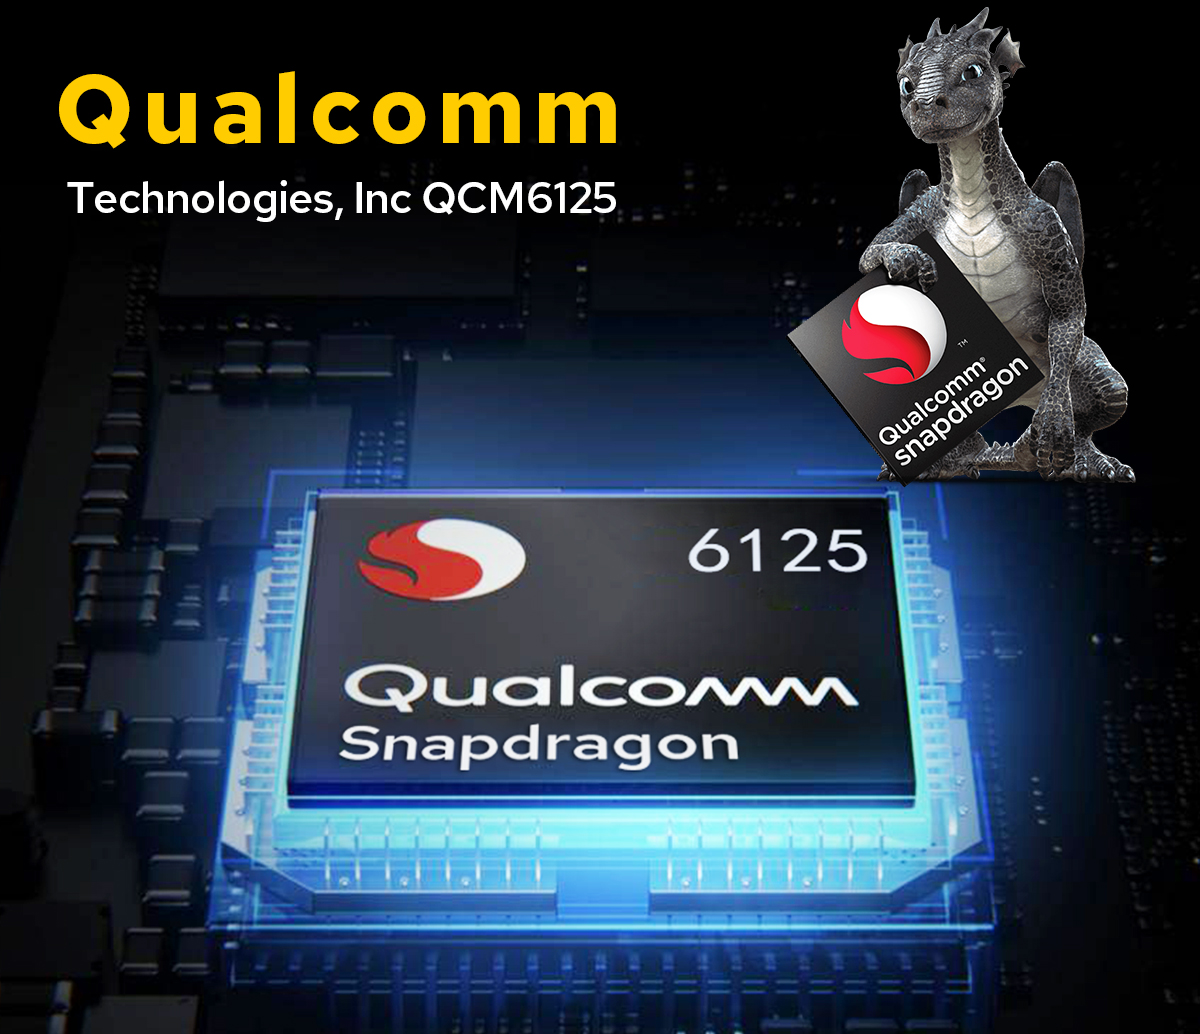 JOYING 11.6 Inch Qualcomm Snapdragon 6125 Car Radio Universal Double DIN